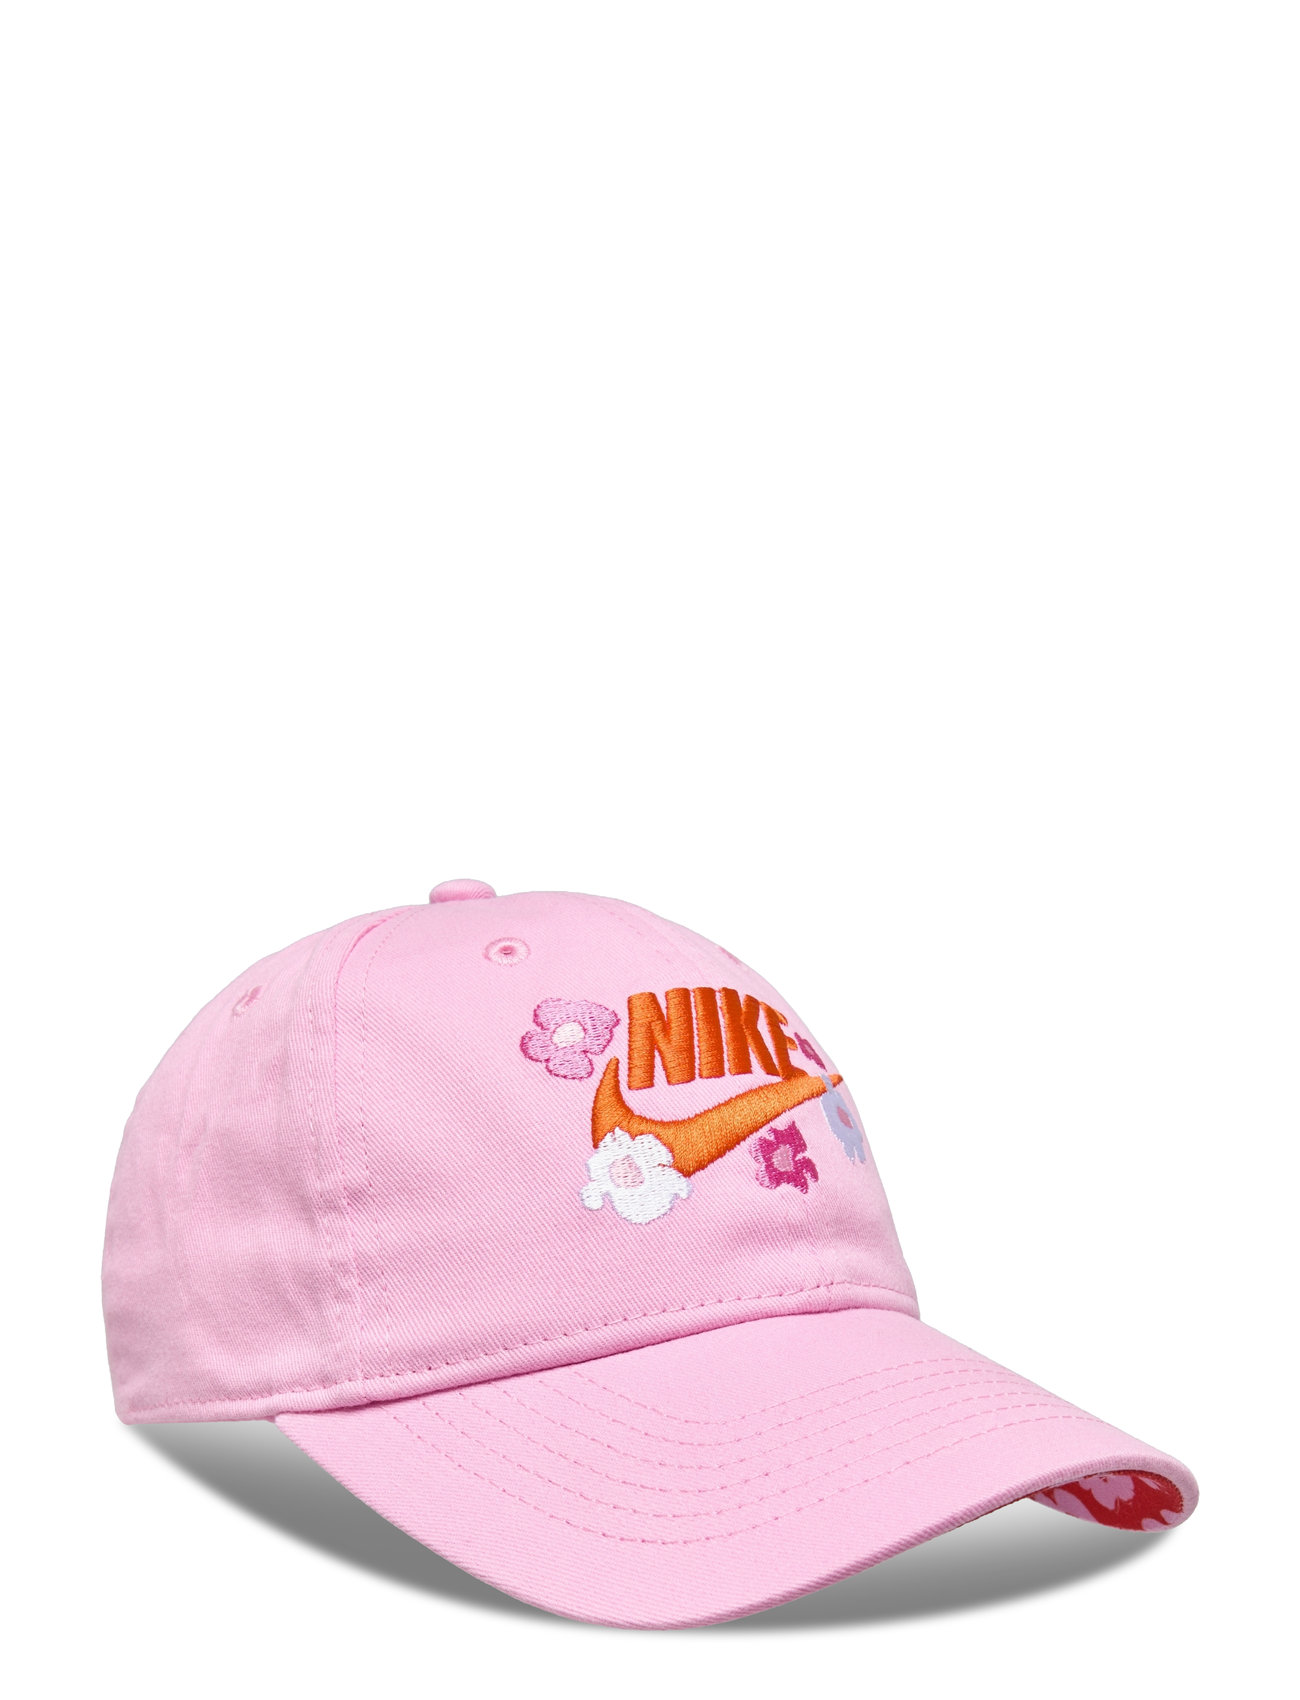 Nag Your Move Club Cap / Nag Your Move Club Cap Sport Headwear Caps Pink Nike